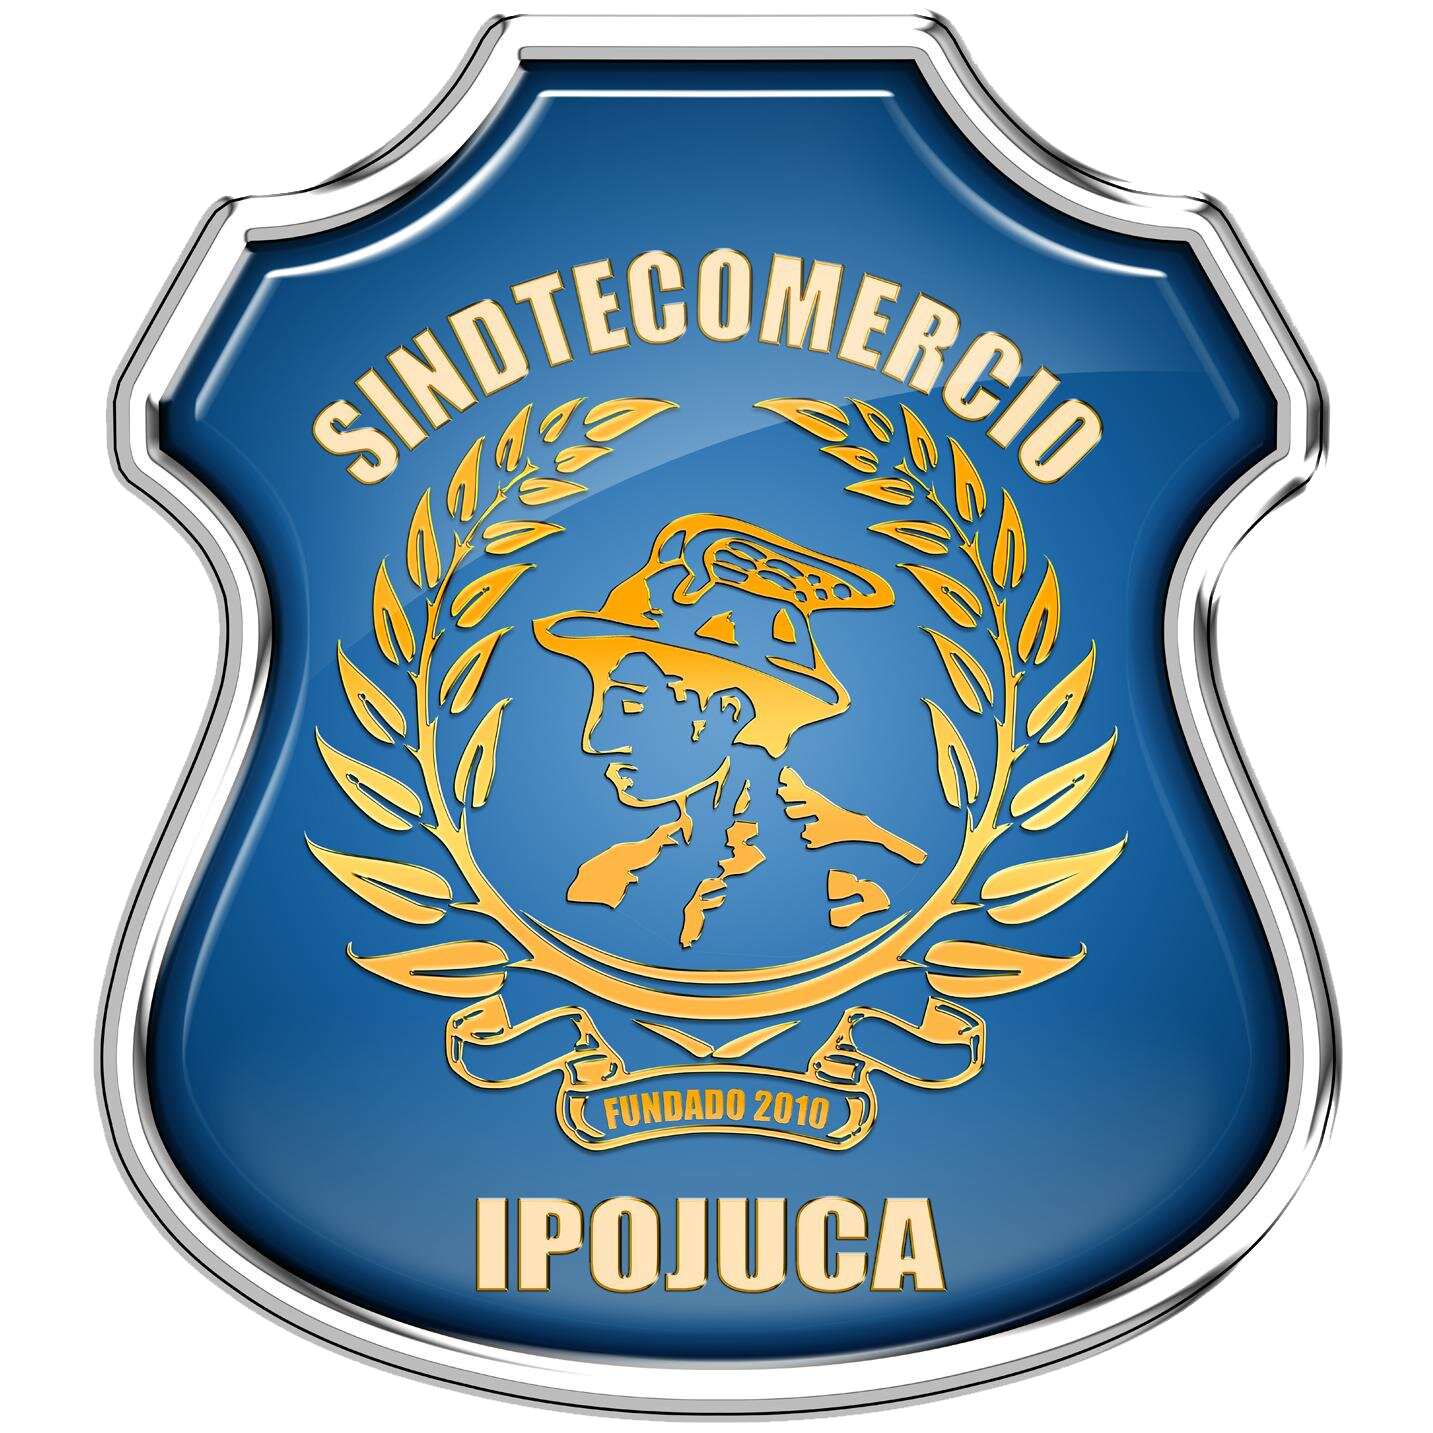 sinditecomercio ipojuca logo.png